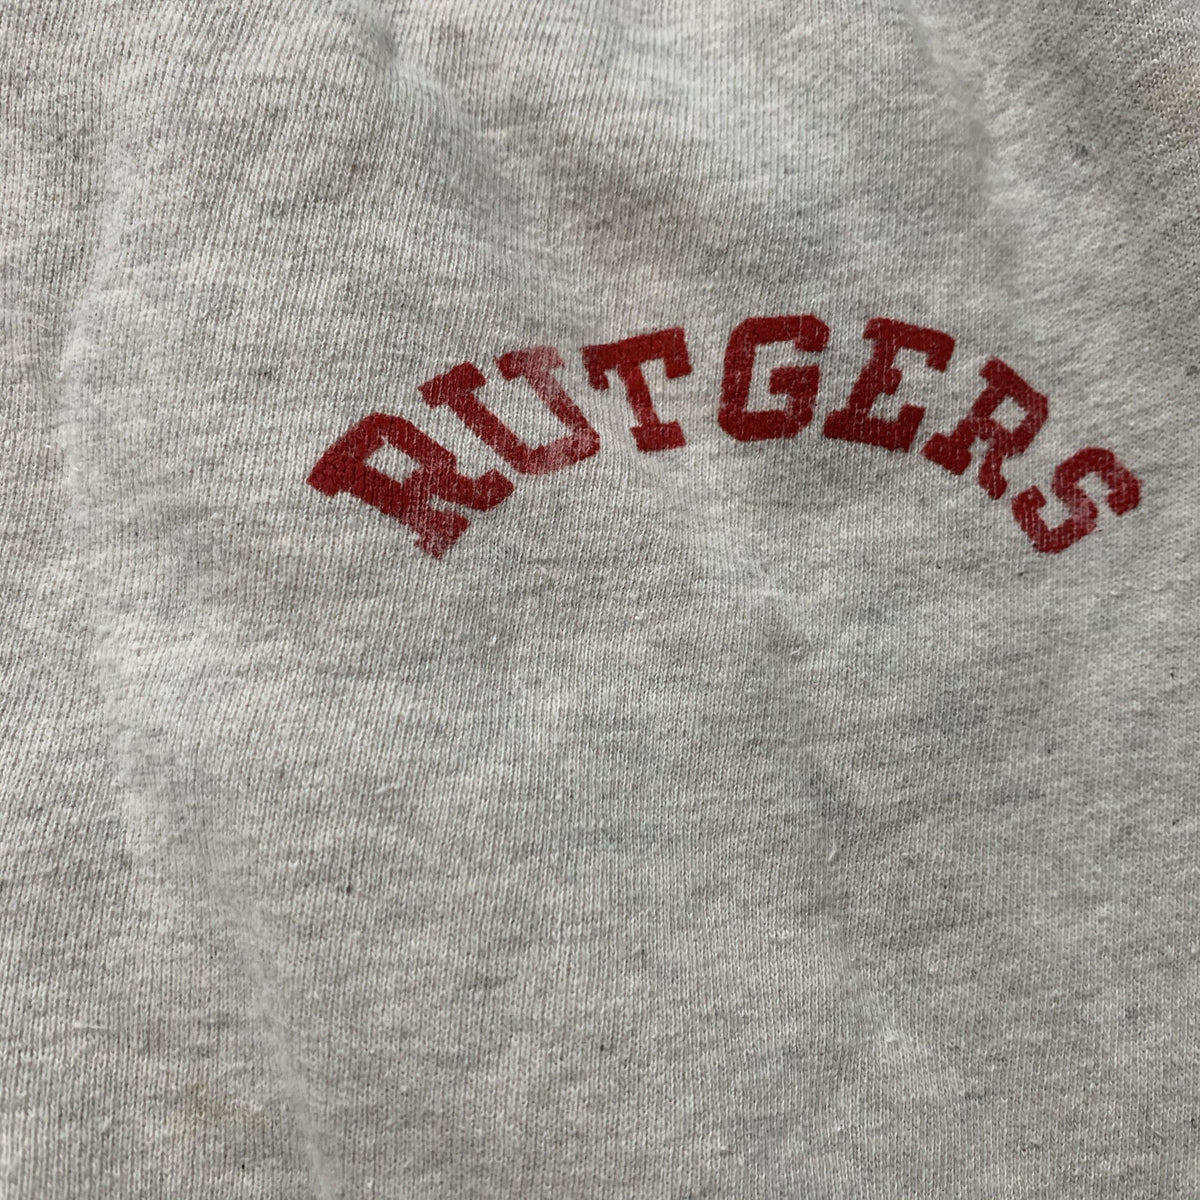 Vintage Rutgers University Scarlet Knights Sweatpants detail